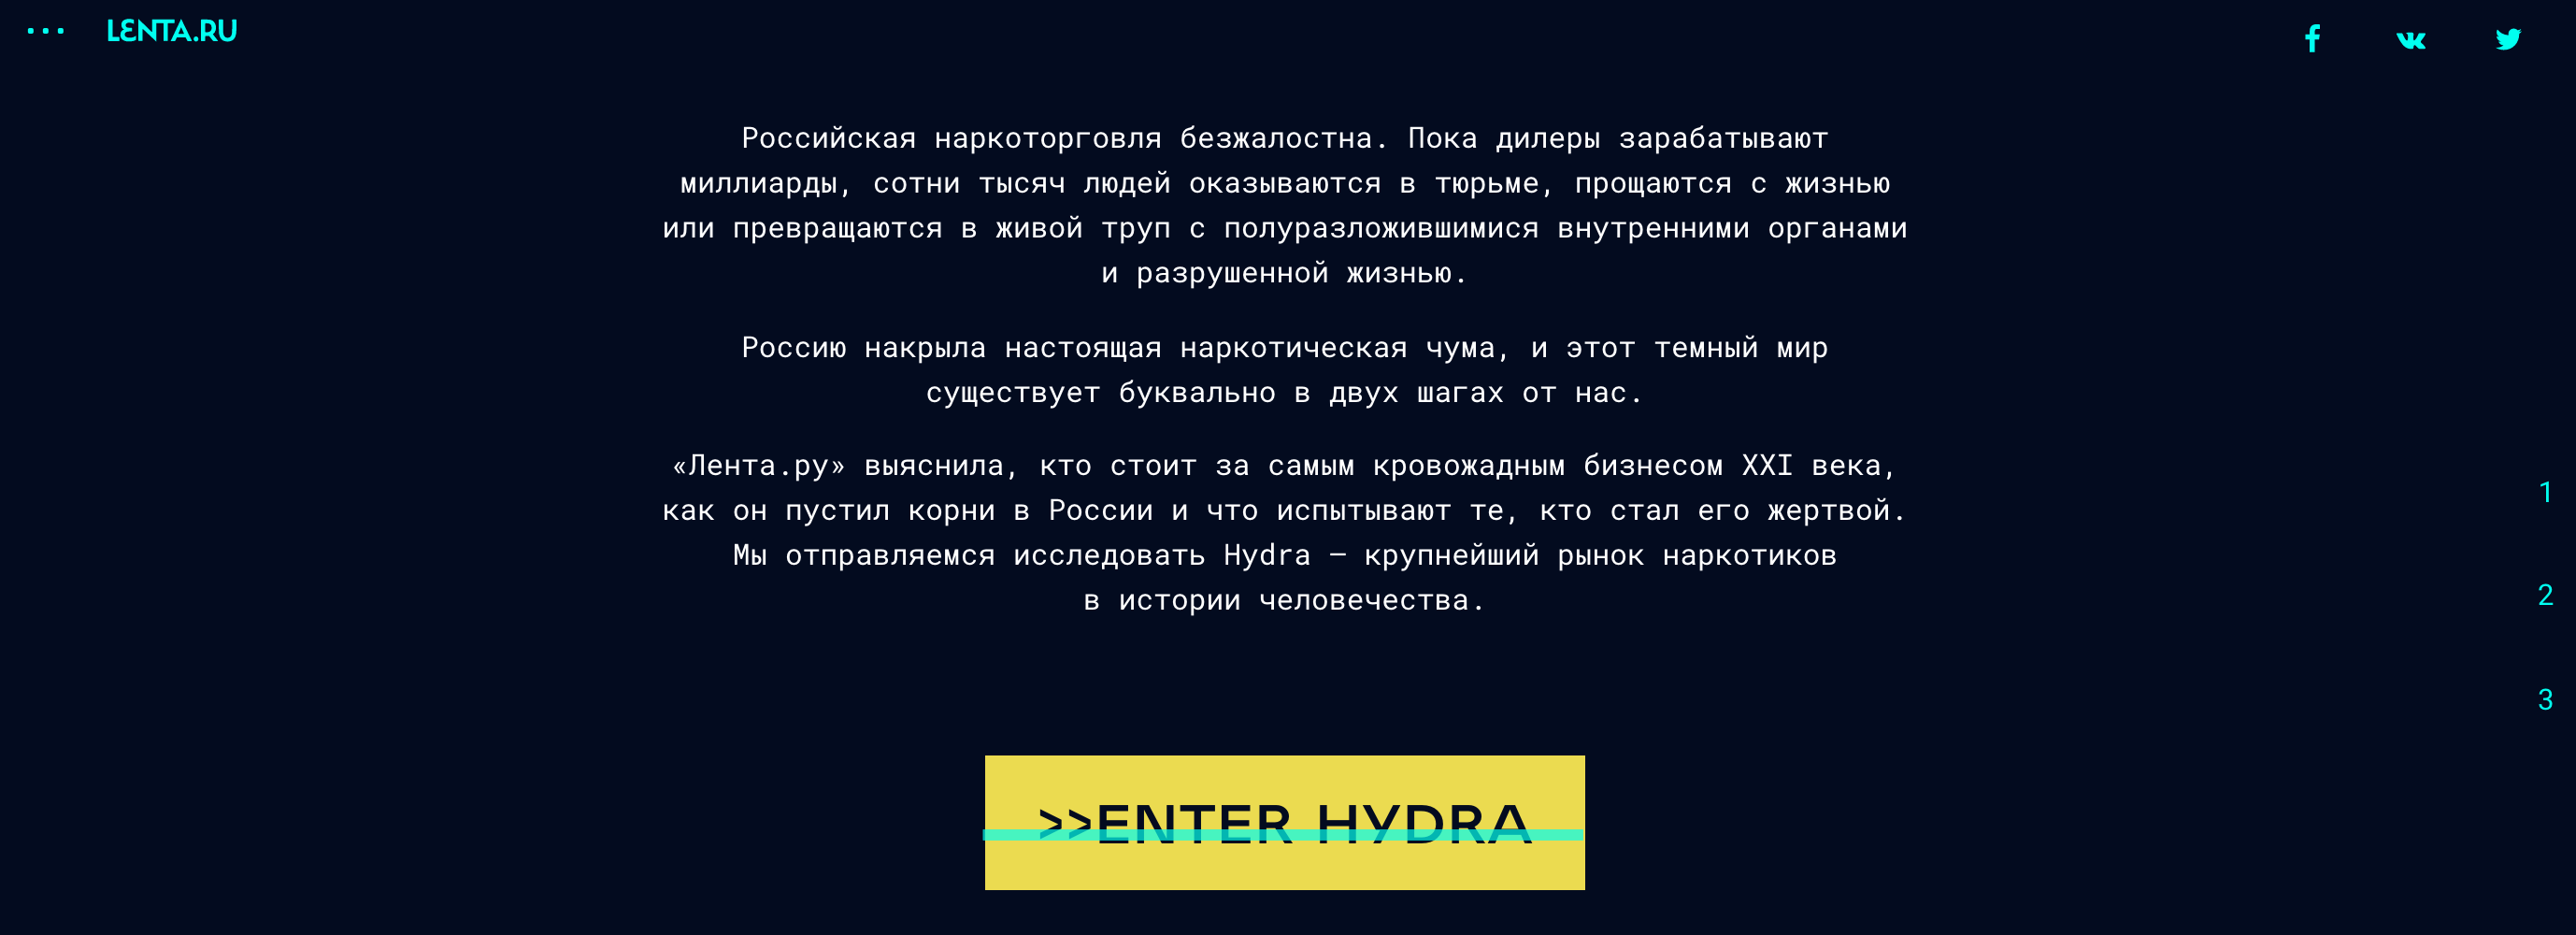 Lenta ru darknet hidra скачать браузер тор rus hudra